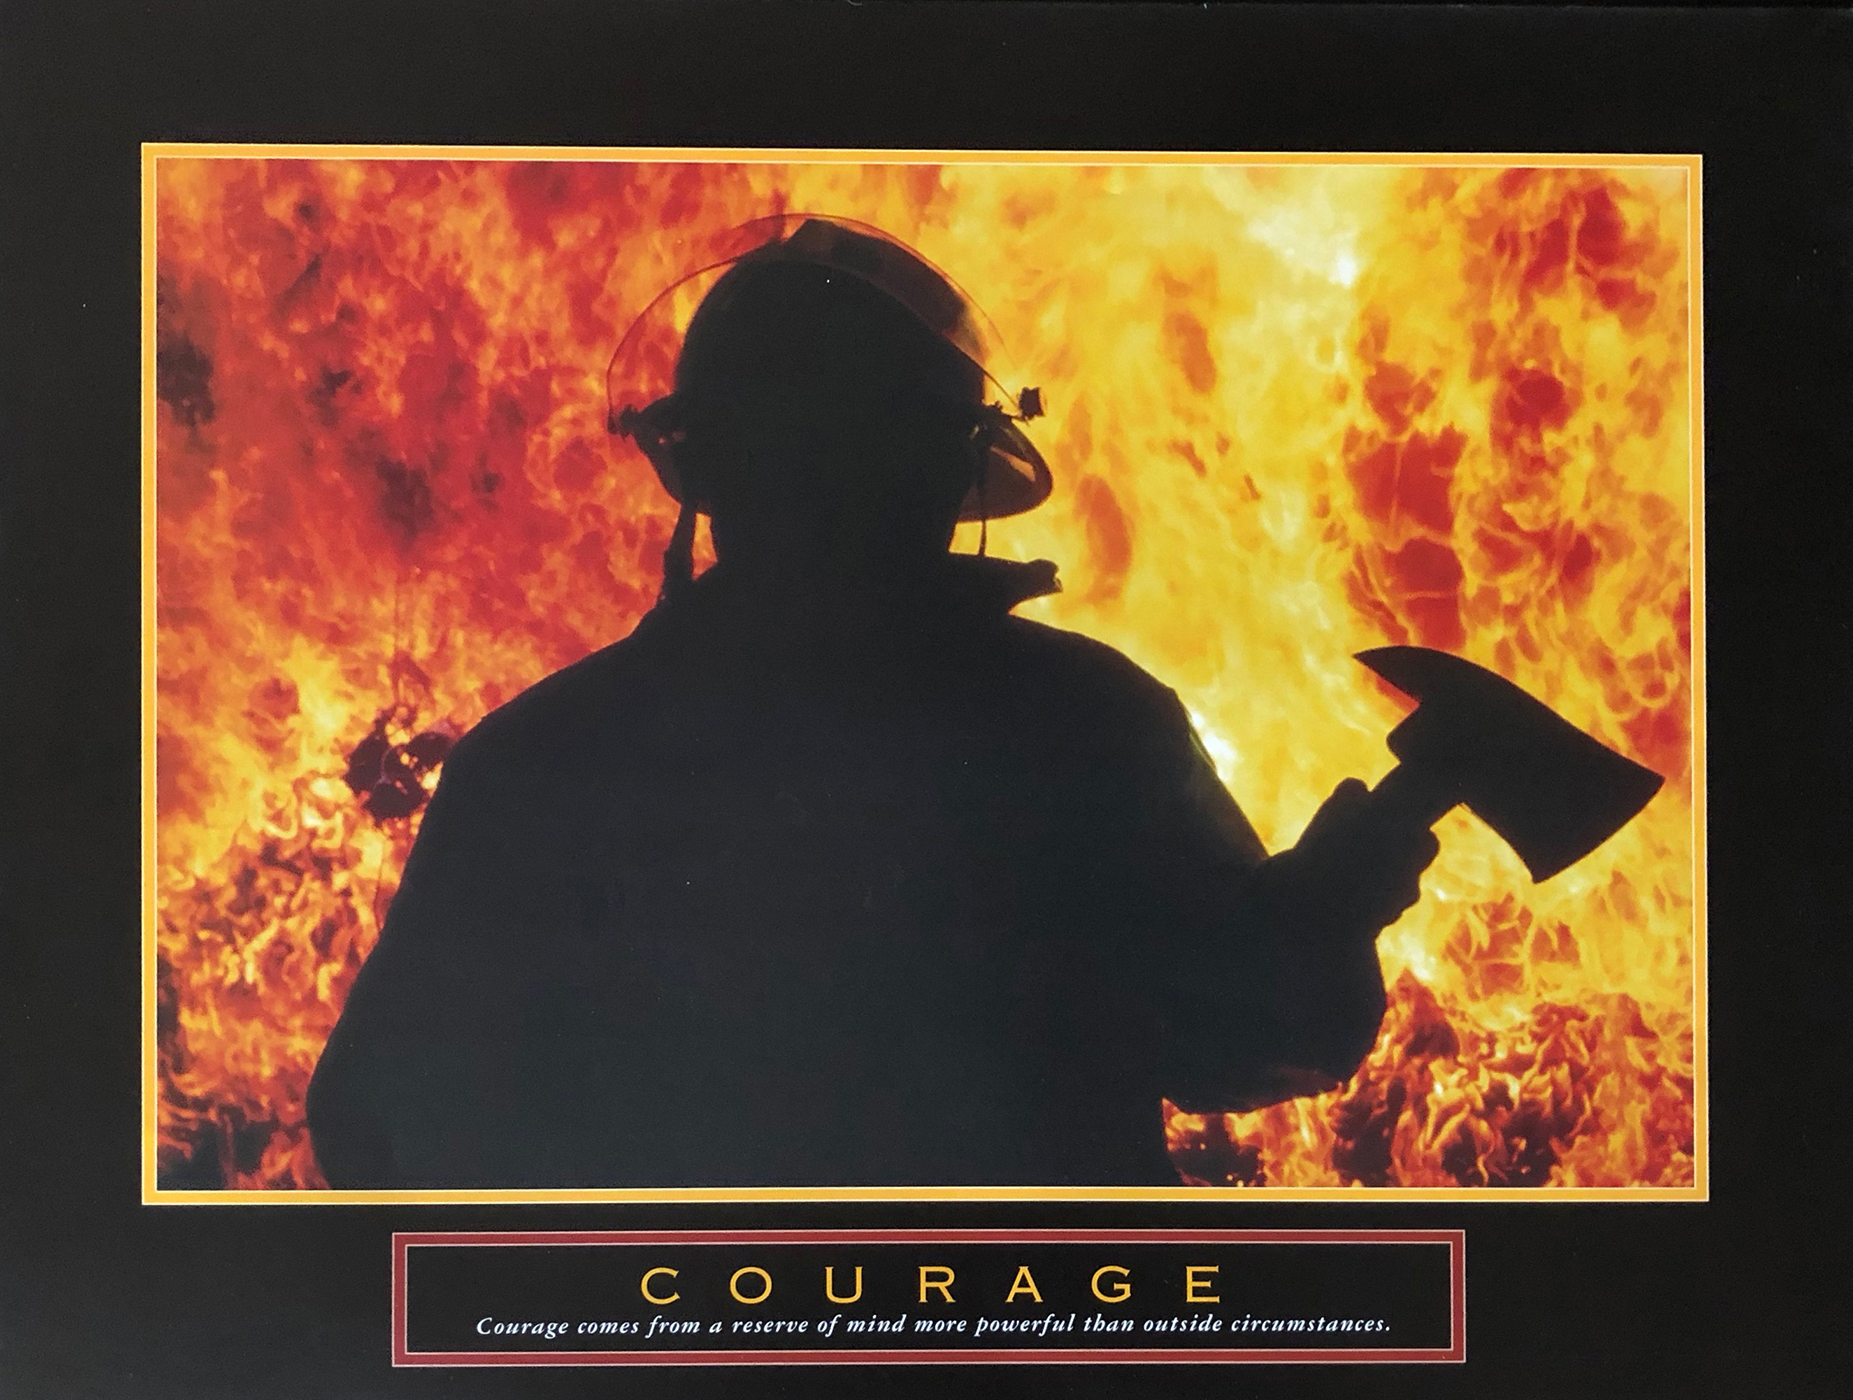 Courage - Fireman with Axe